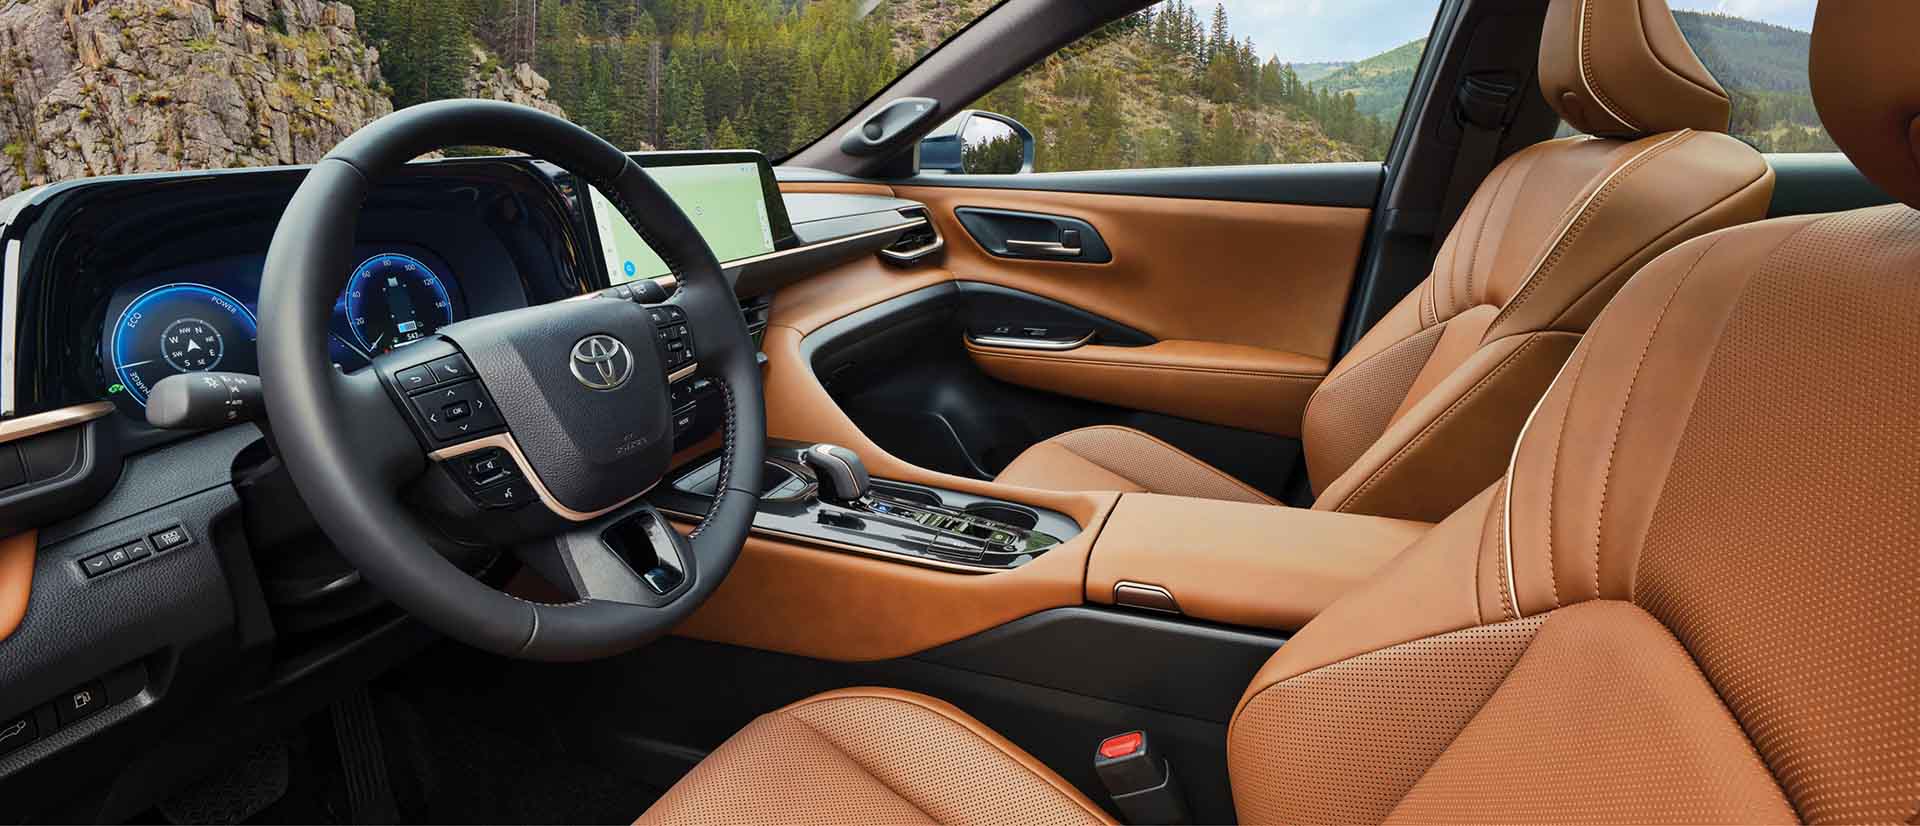 Toyota interior cockpit with luxury materials